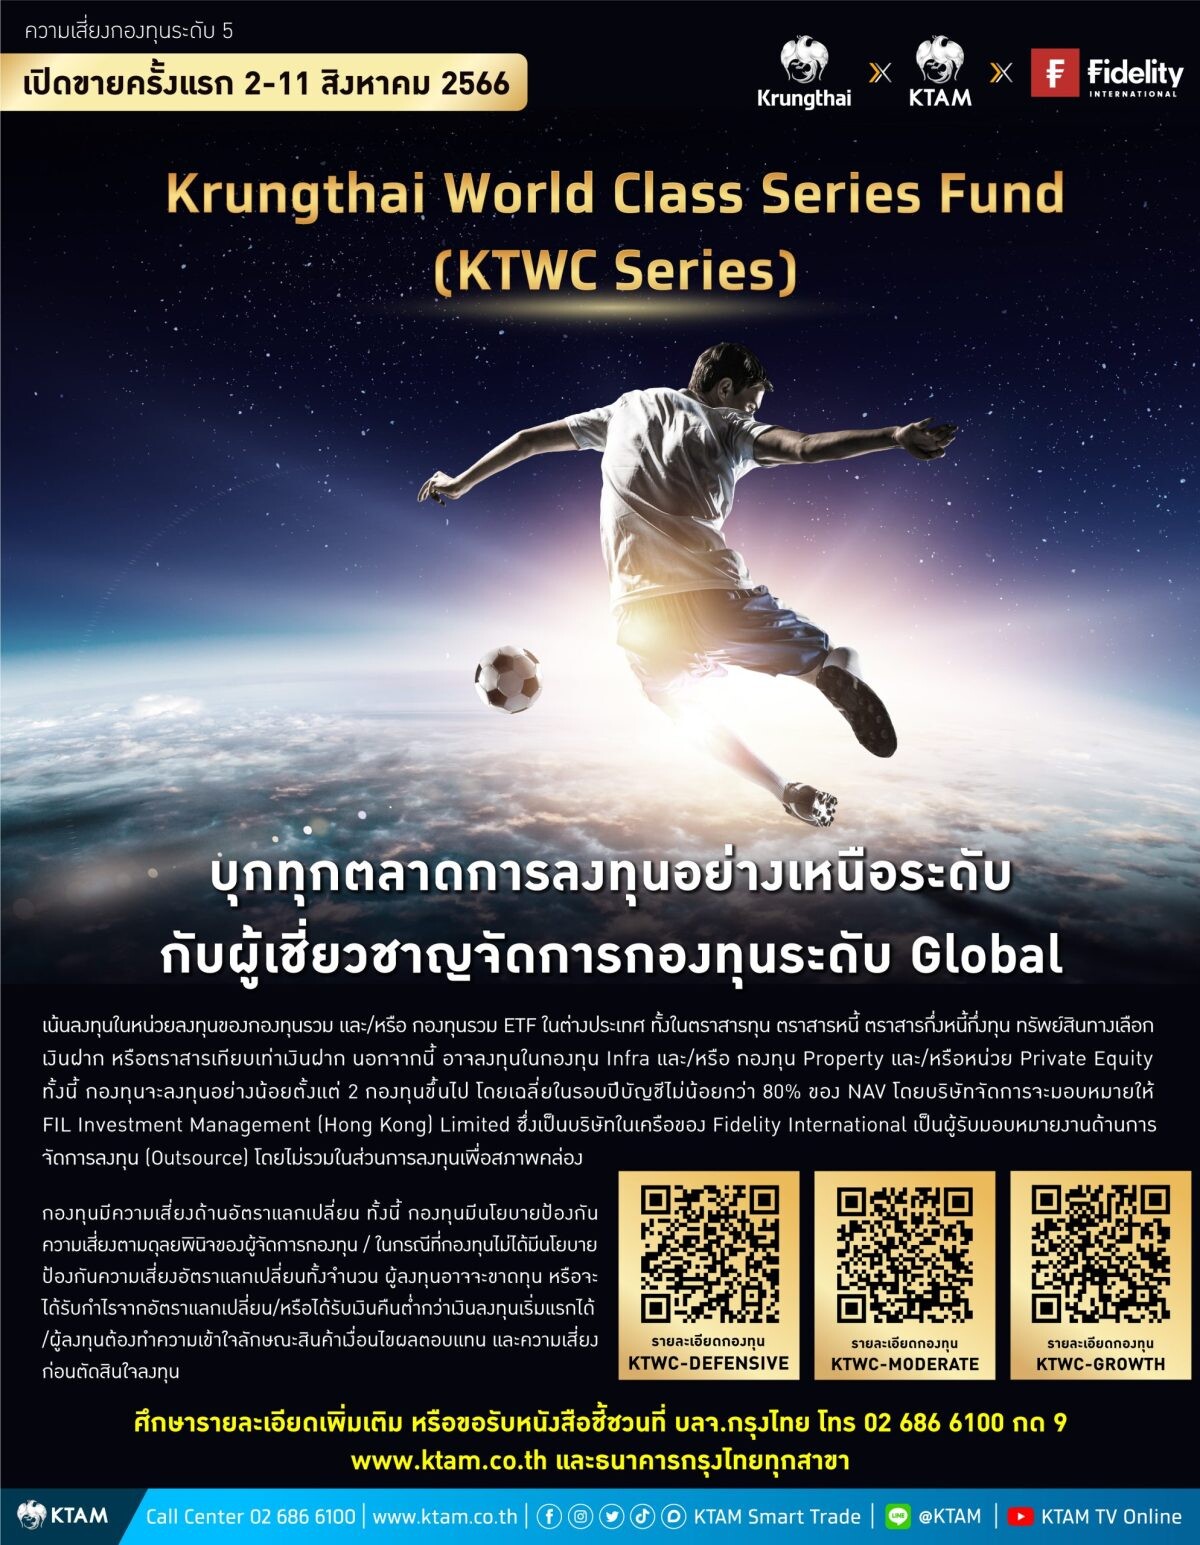 KTAM ออกกองทุนผสม "KTWC Series" เปิดขายครั้งแรก 2-11 ส.ค.นี้ เปิดโอกาสสร้างการเติบโตในระยะยาวภายใต้ทุกสภาวะตลาด คัดสรรโดยผู้จัดการกองทุนระดับโลก